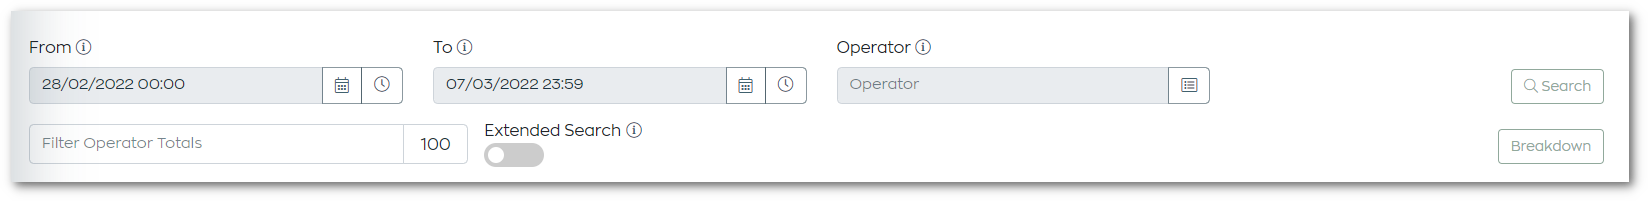 operator_report_filters.png